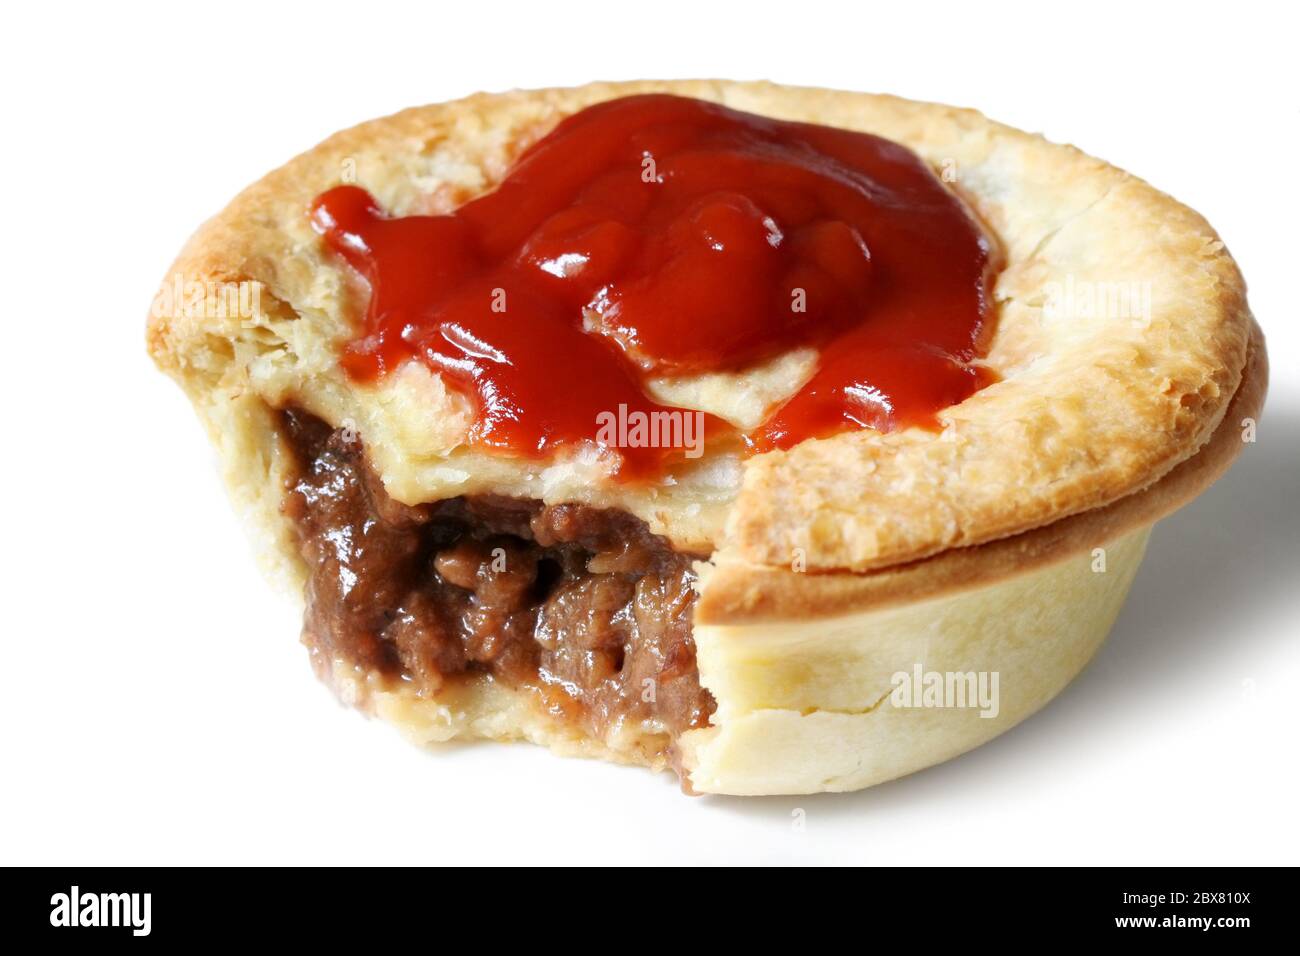 Australian meat pie and tomato Photo Alamy